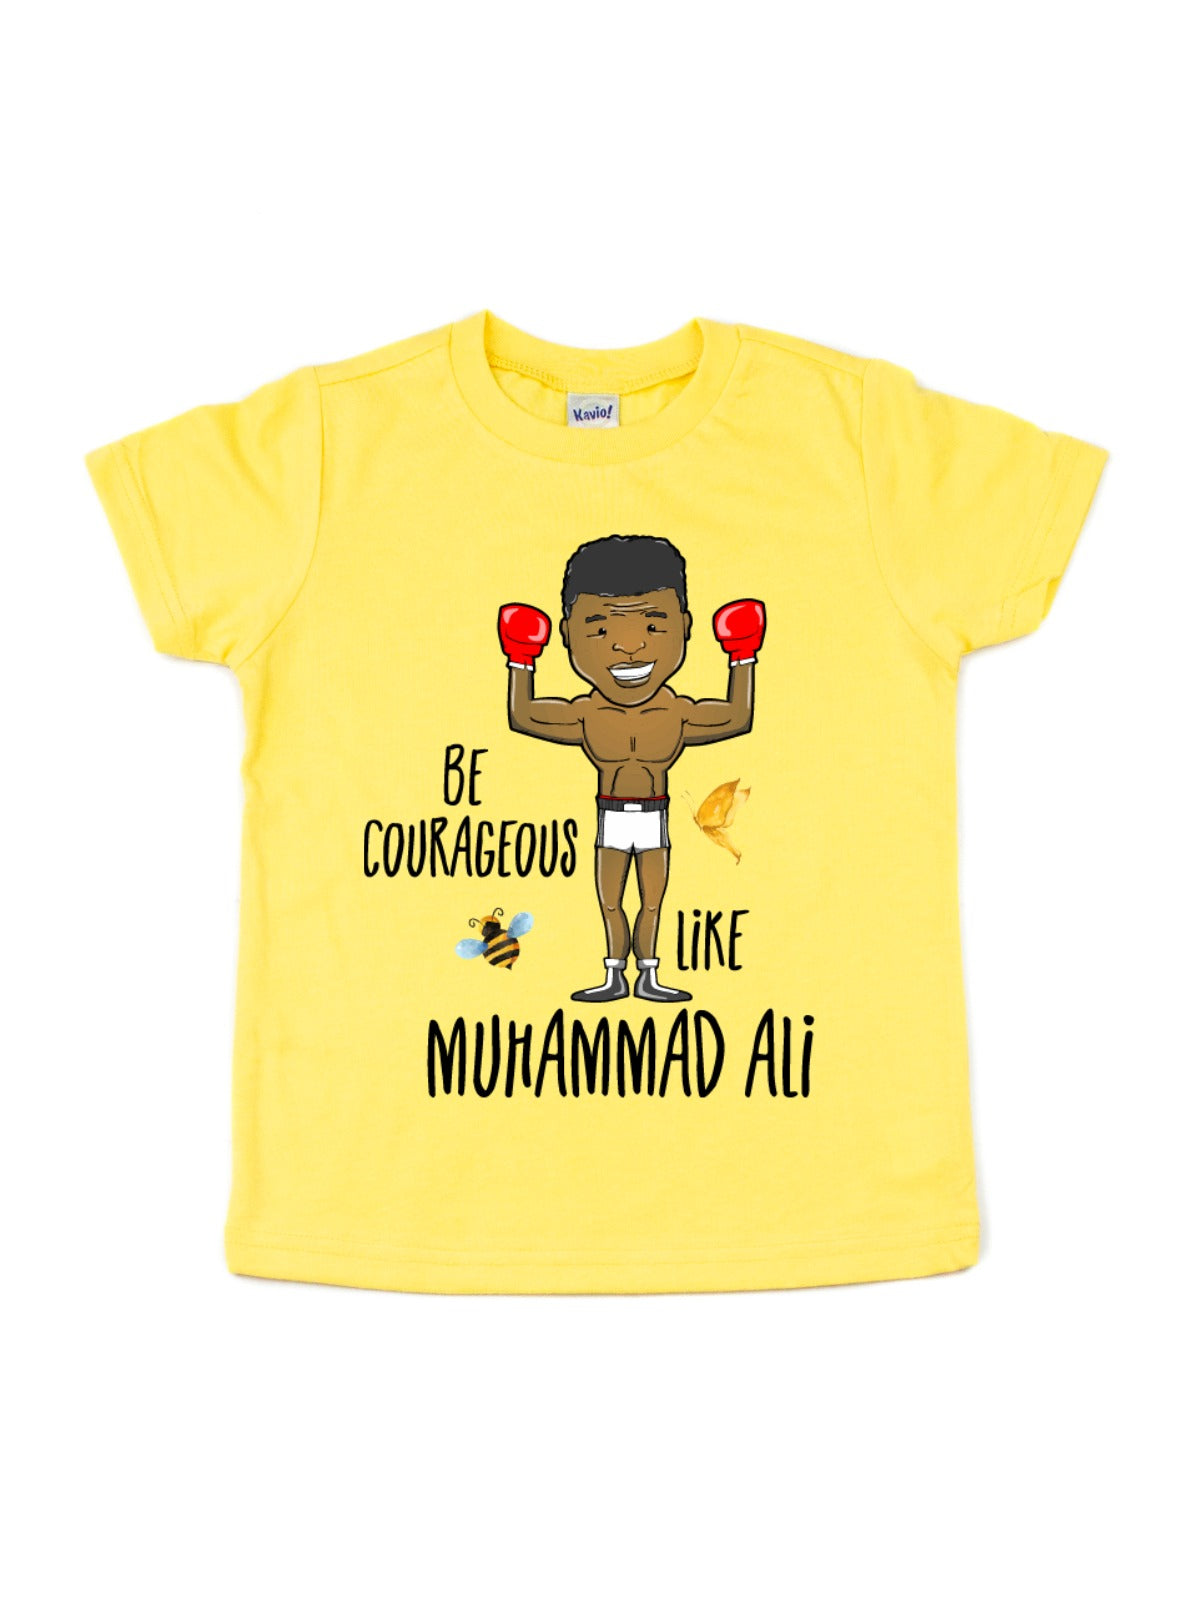 Be Courageous like Muhammad Ali Kids Black History Shirt